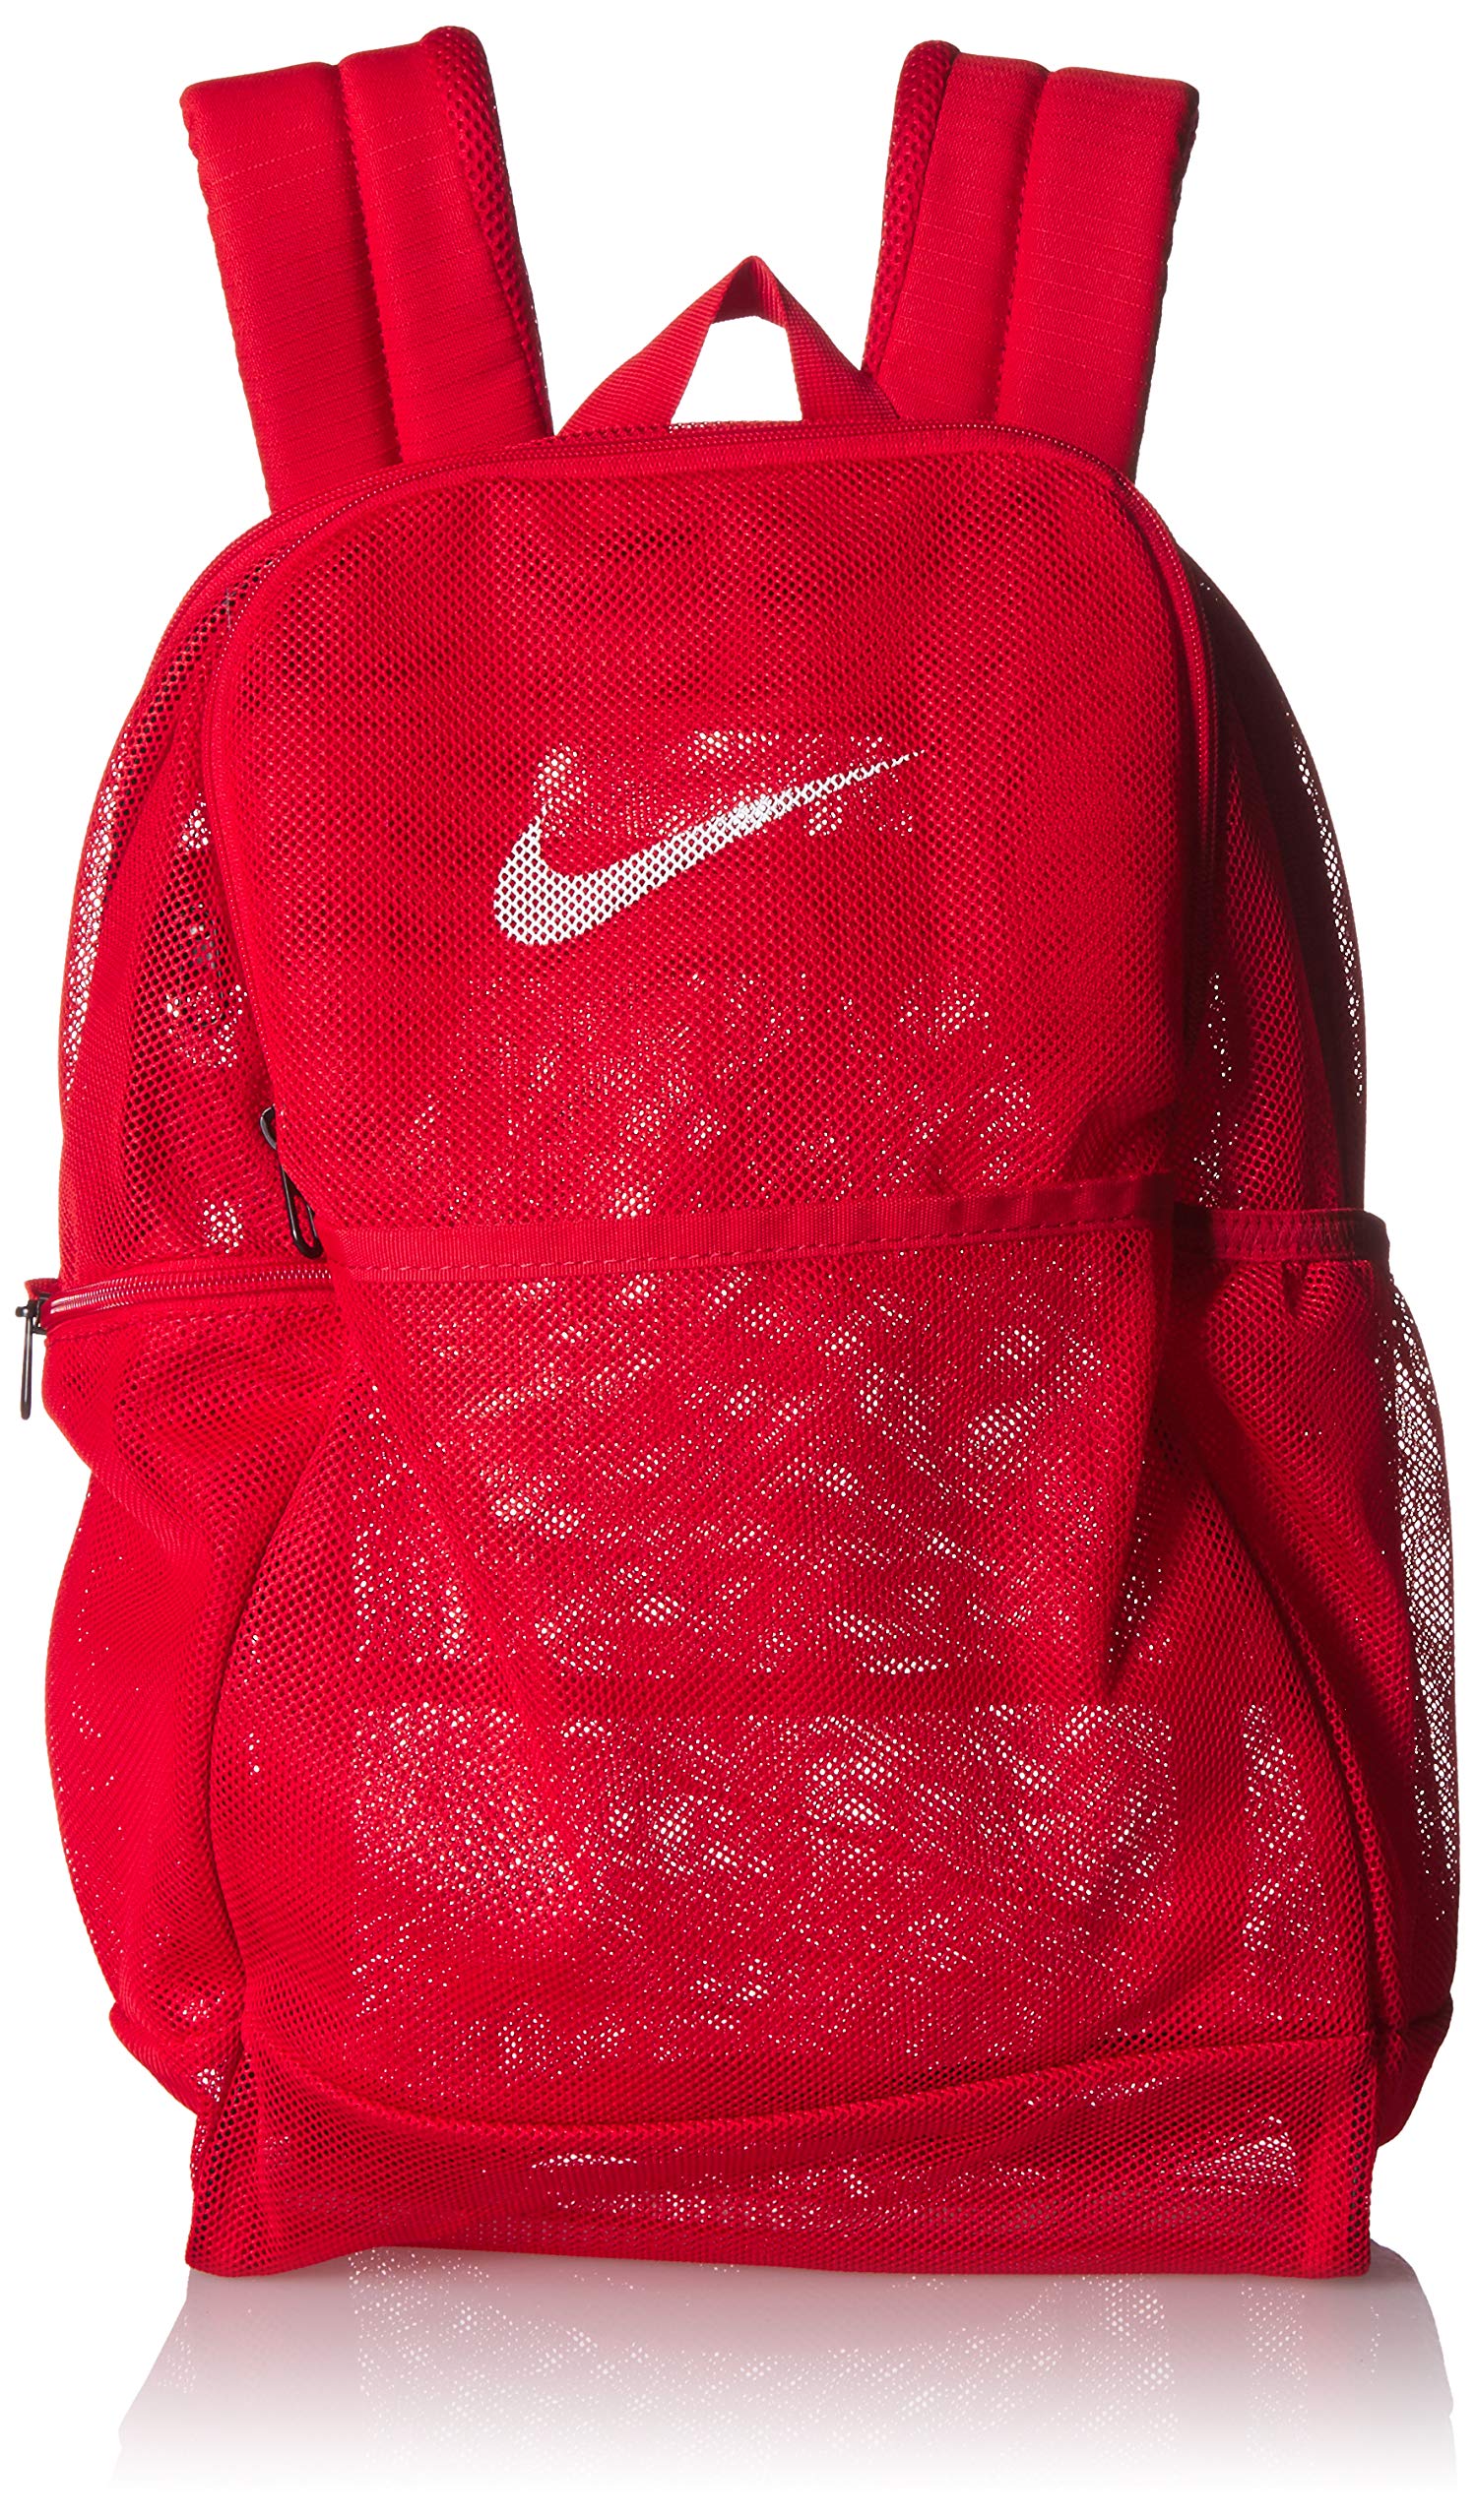 Nike Max Air Backpack (Red) | Nike air max, Nike, Clothes design